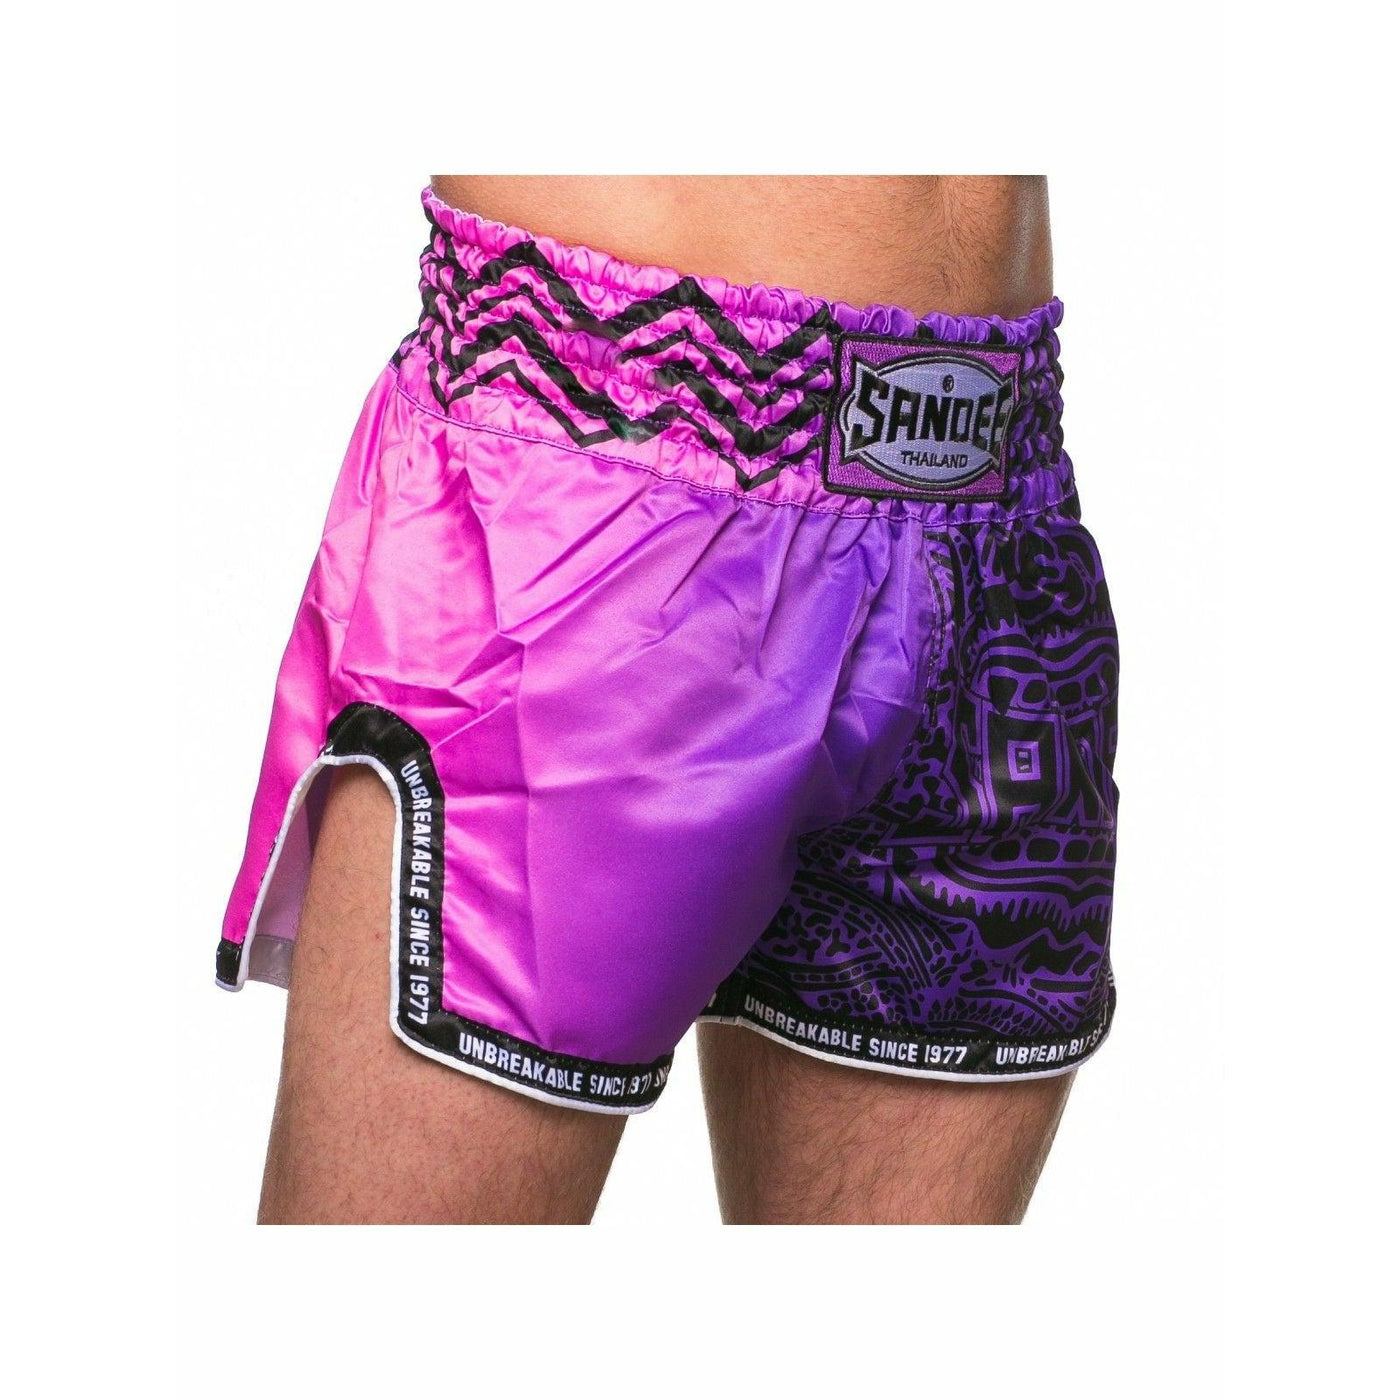 Sandee Muay Thai Shorts - Warrior Purple & Pink - Muay Thailand